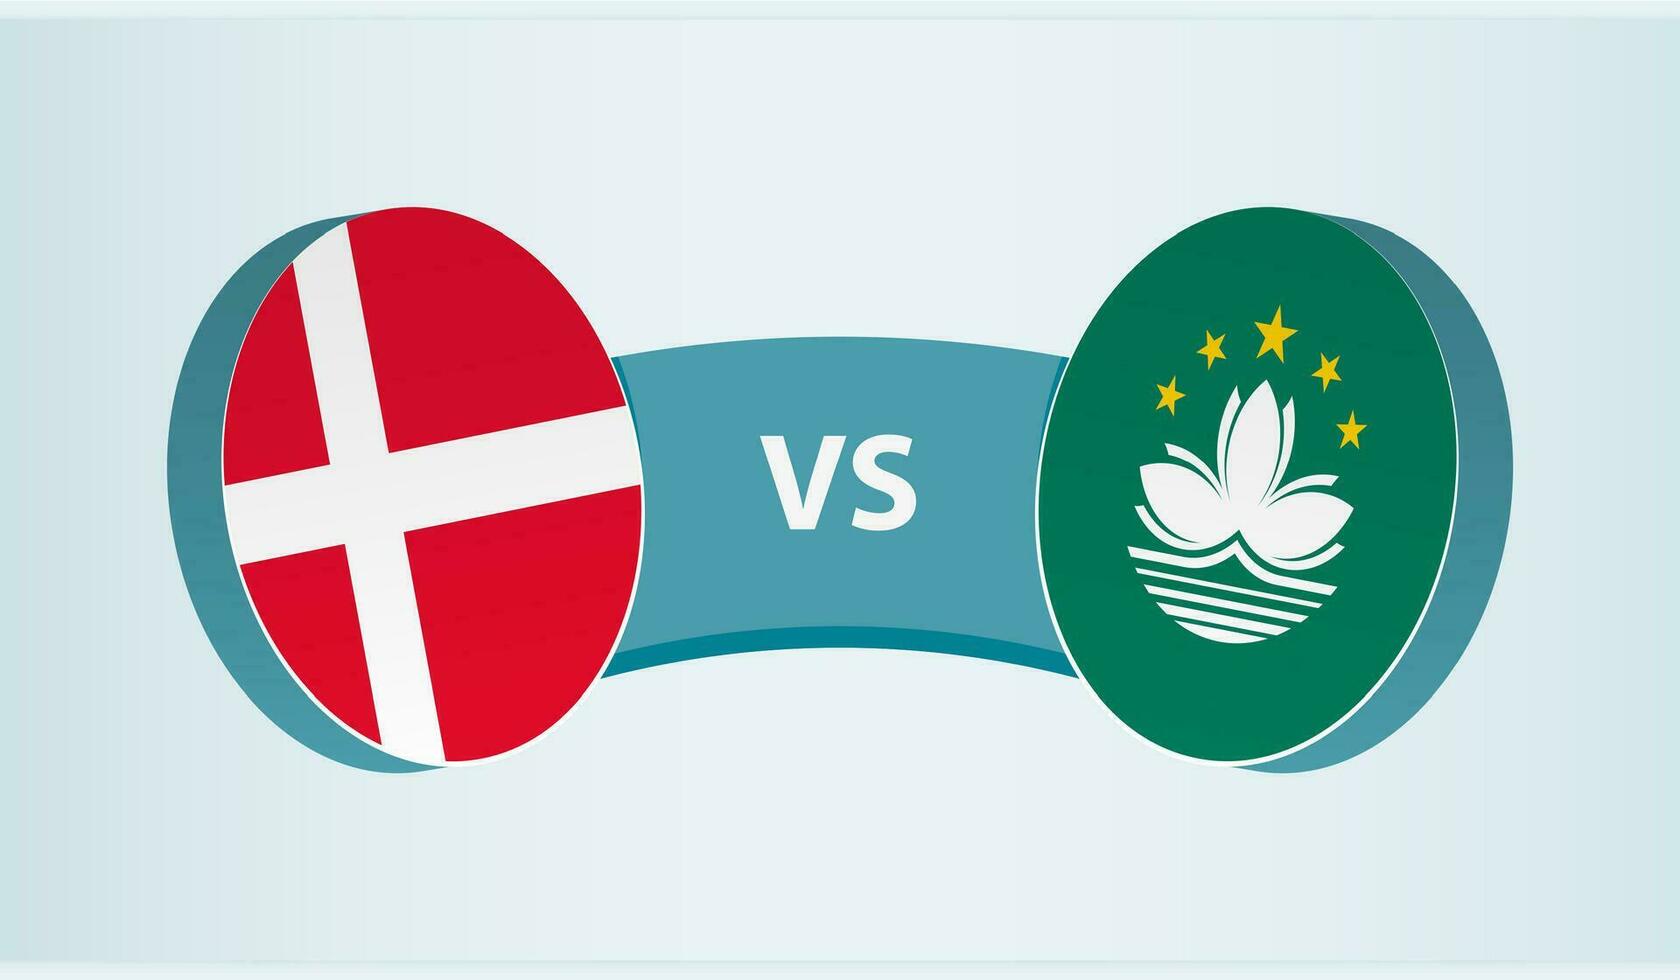 Denmark versus Macau, team sports competition concept. vector